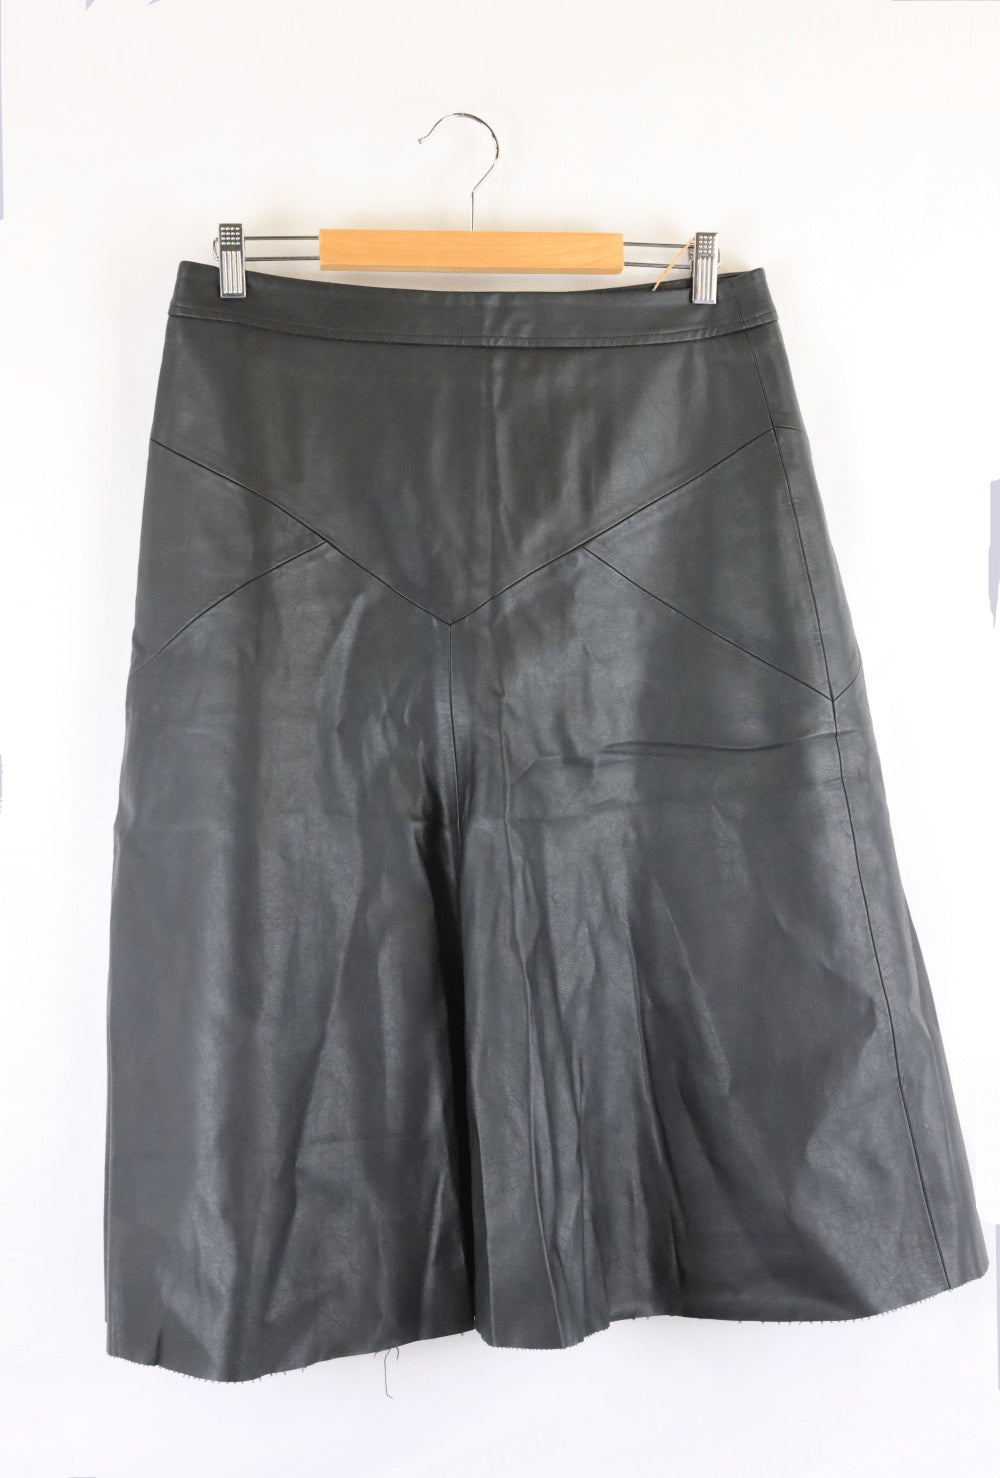 Saba Black Leather Skirt 12